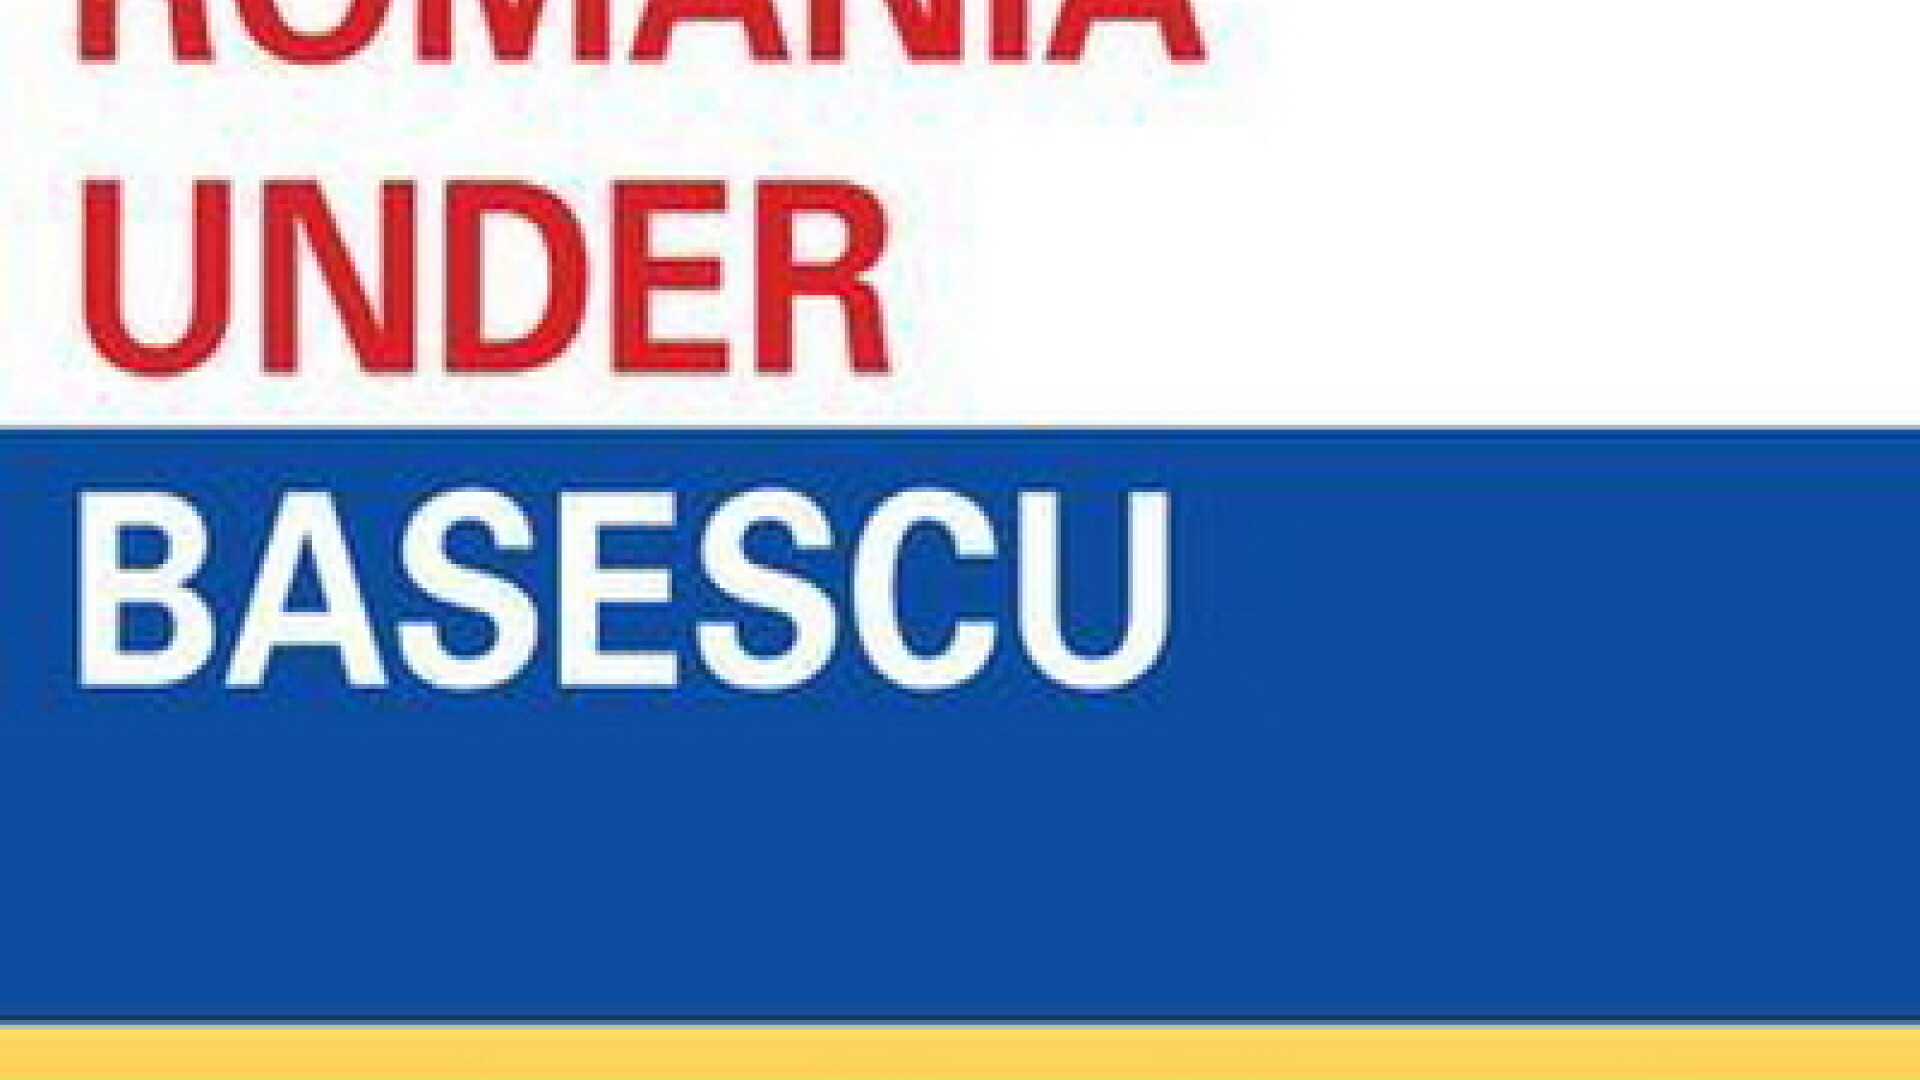 Romania under Basescu